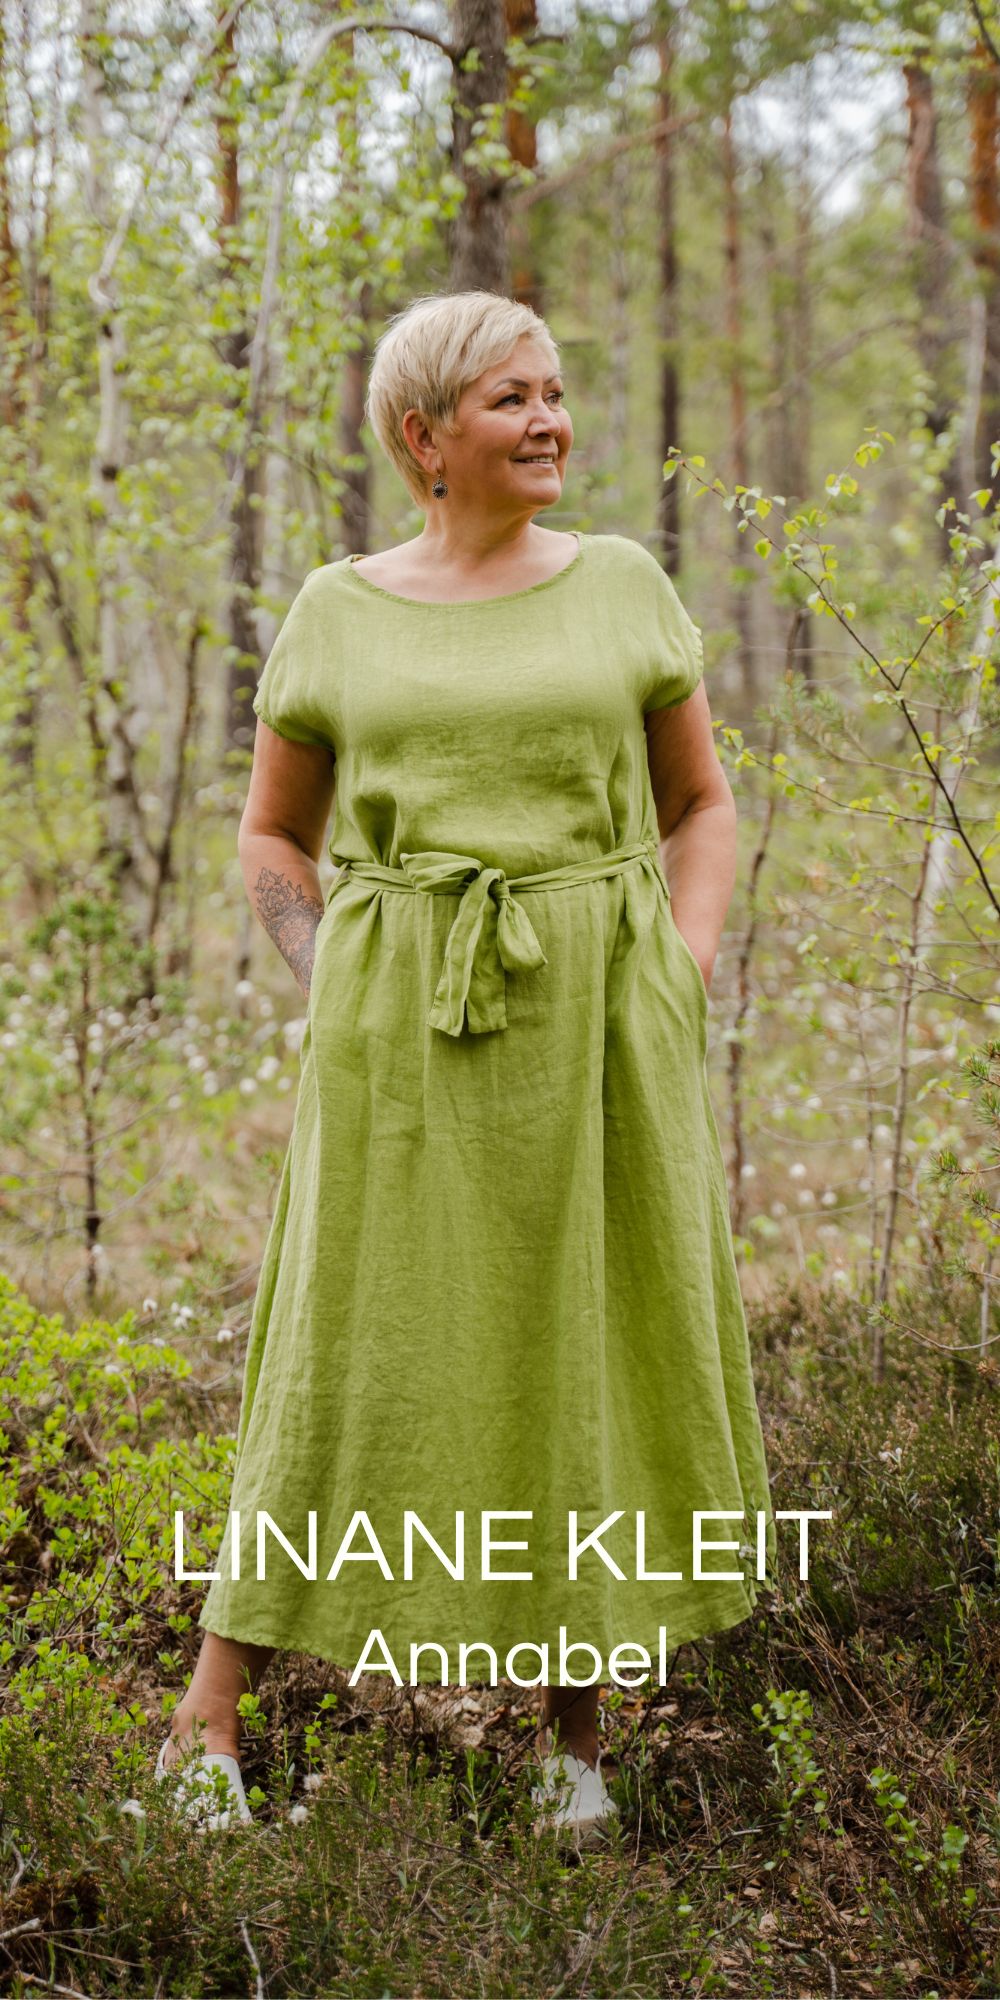 Linane kleit Annabel.jpeg (368 KB)